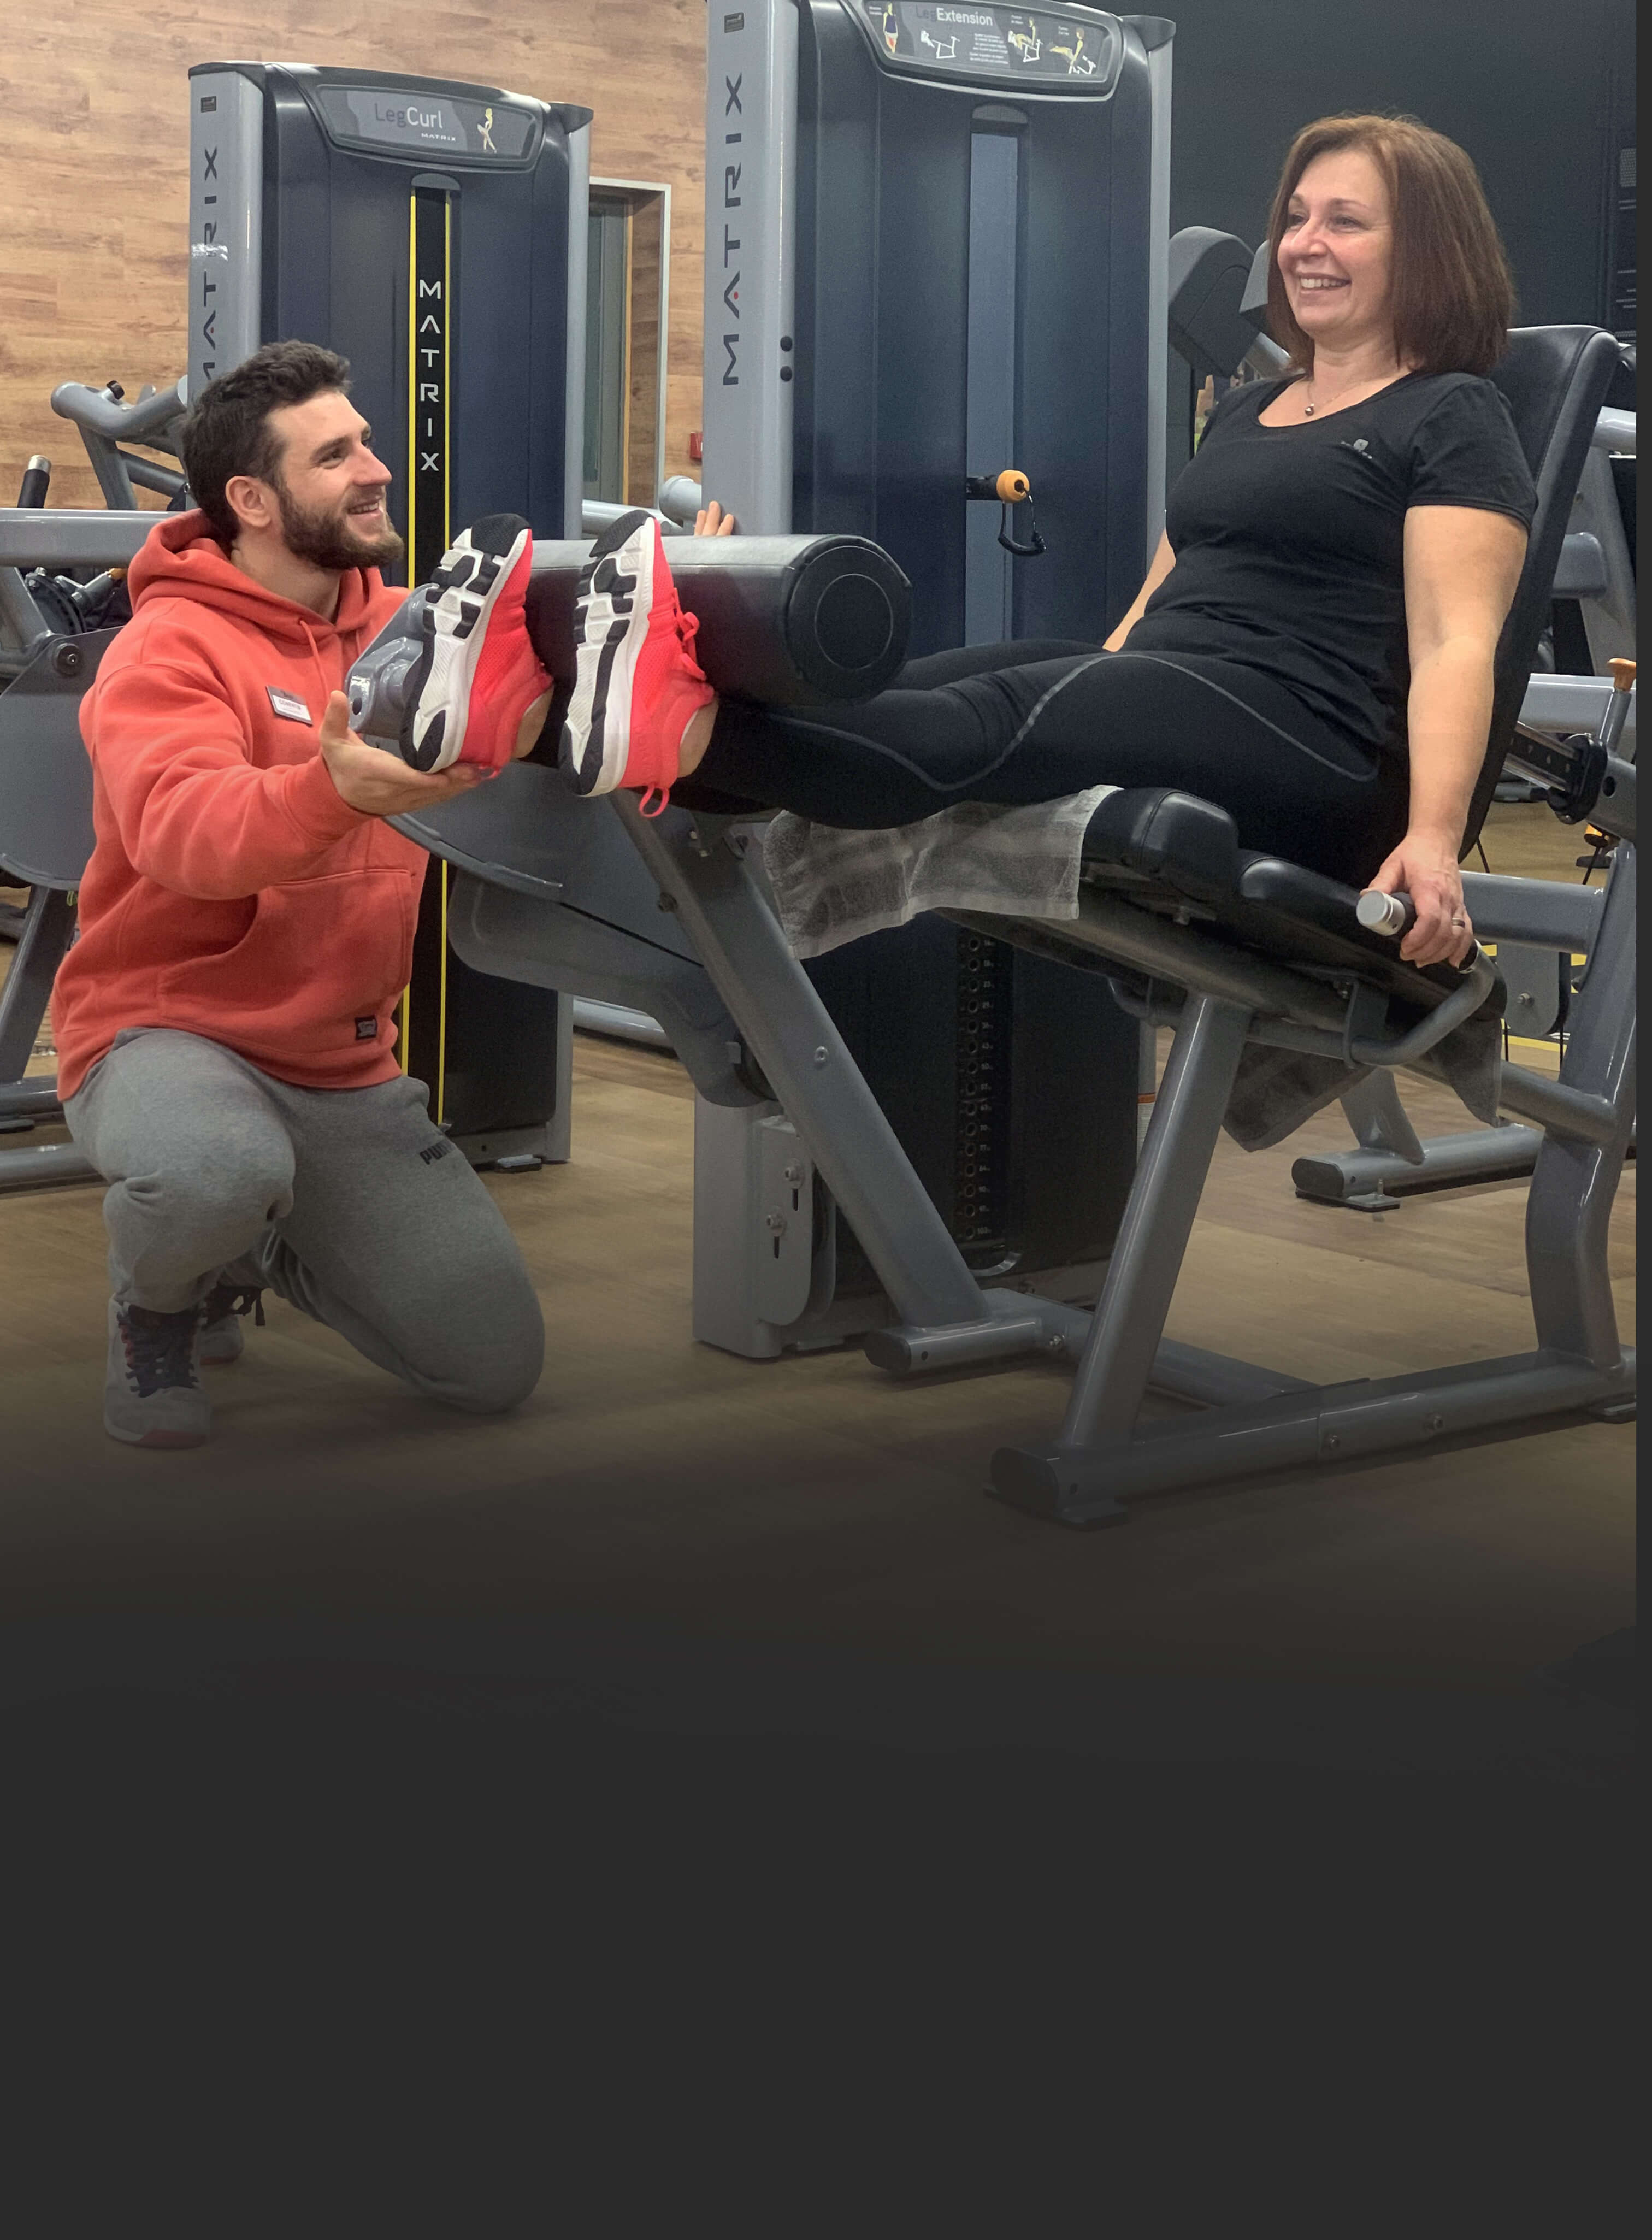 Machines de Musculation ciblant les Abdominaux en Salle de Sport – Interval